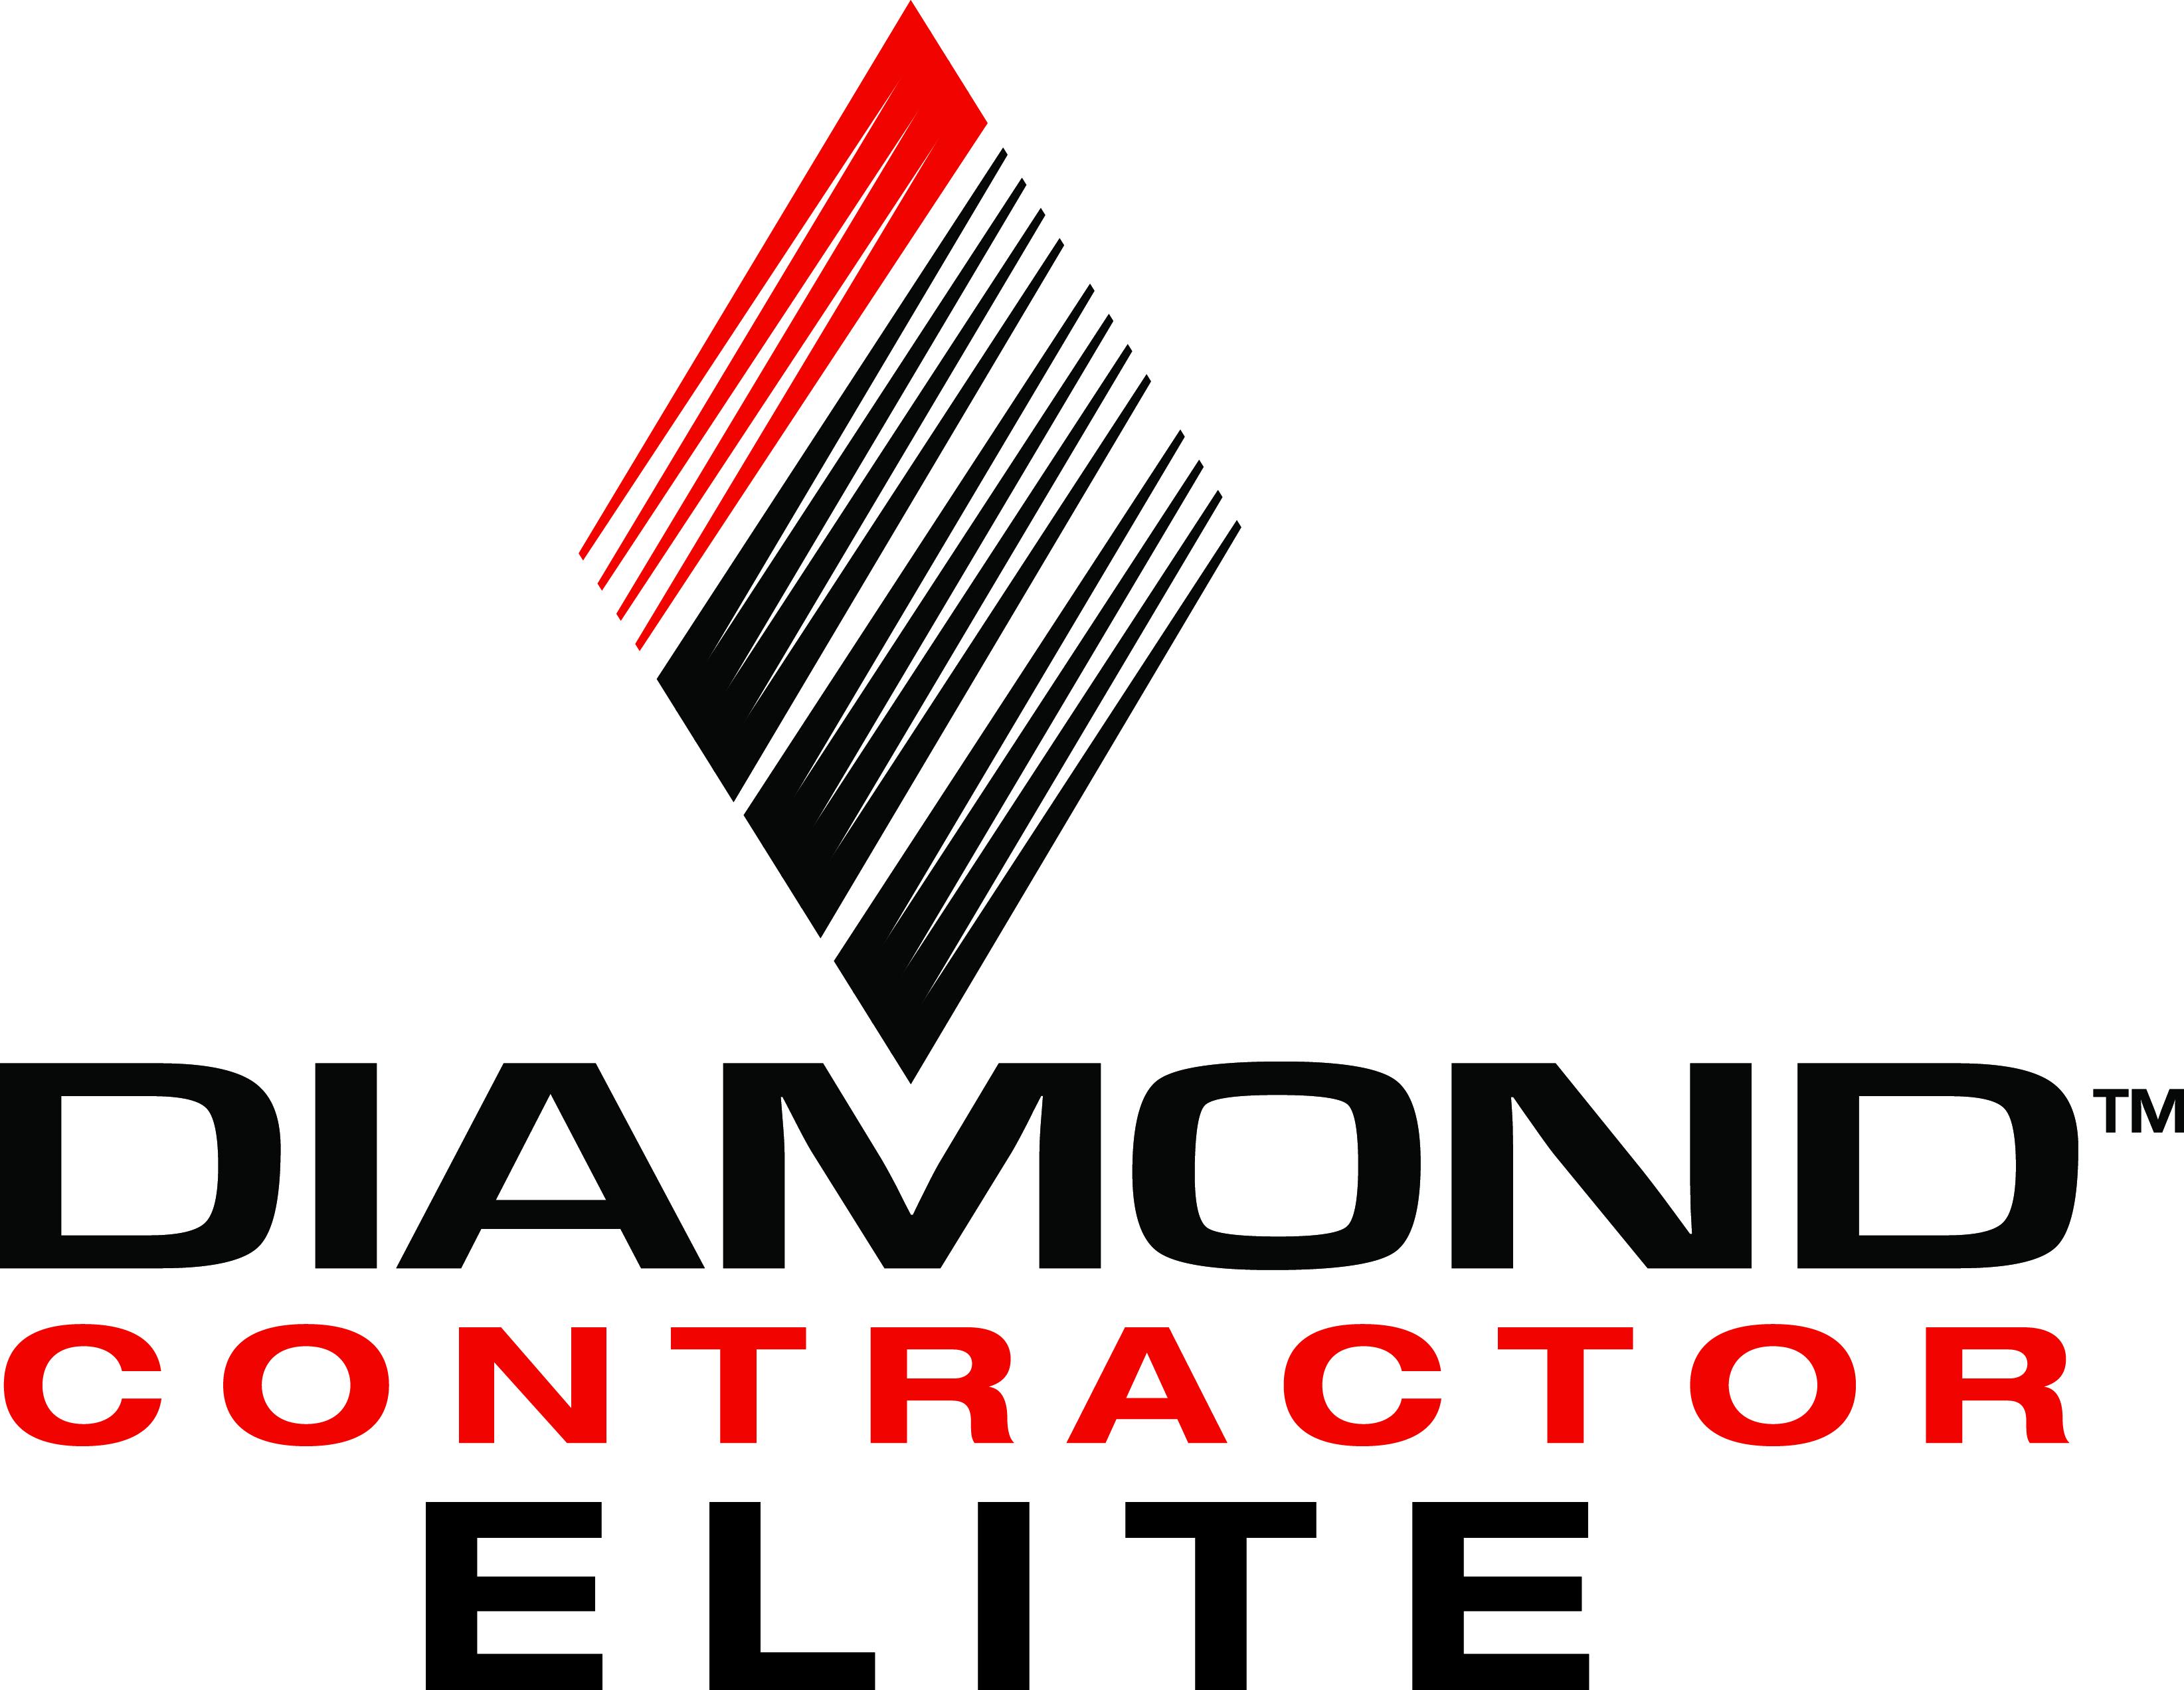 Mitsubishi diamond contractor elite